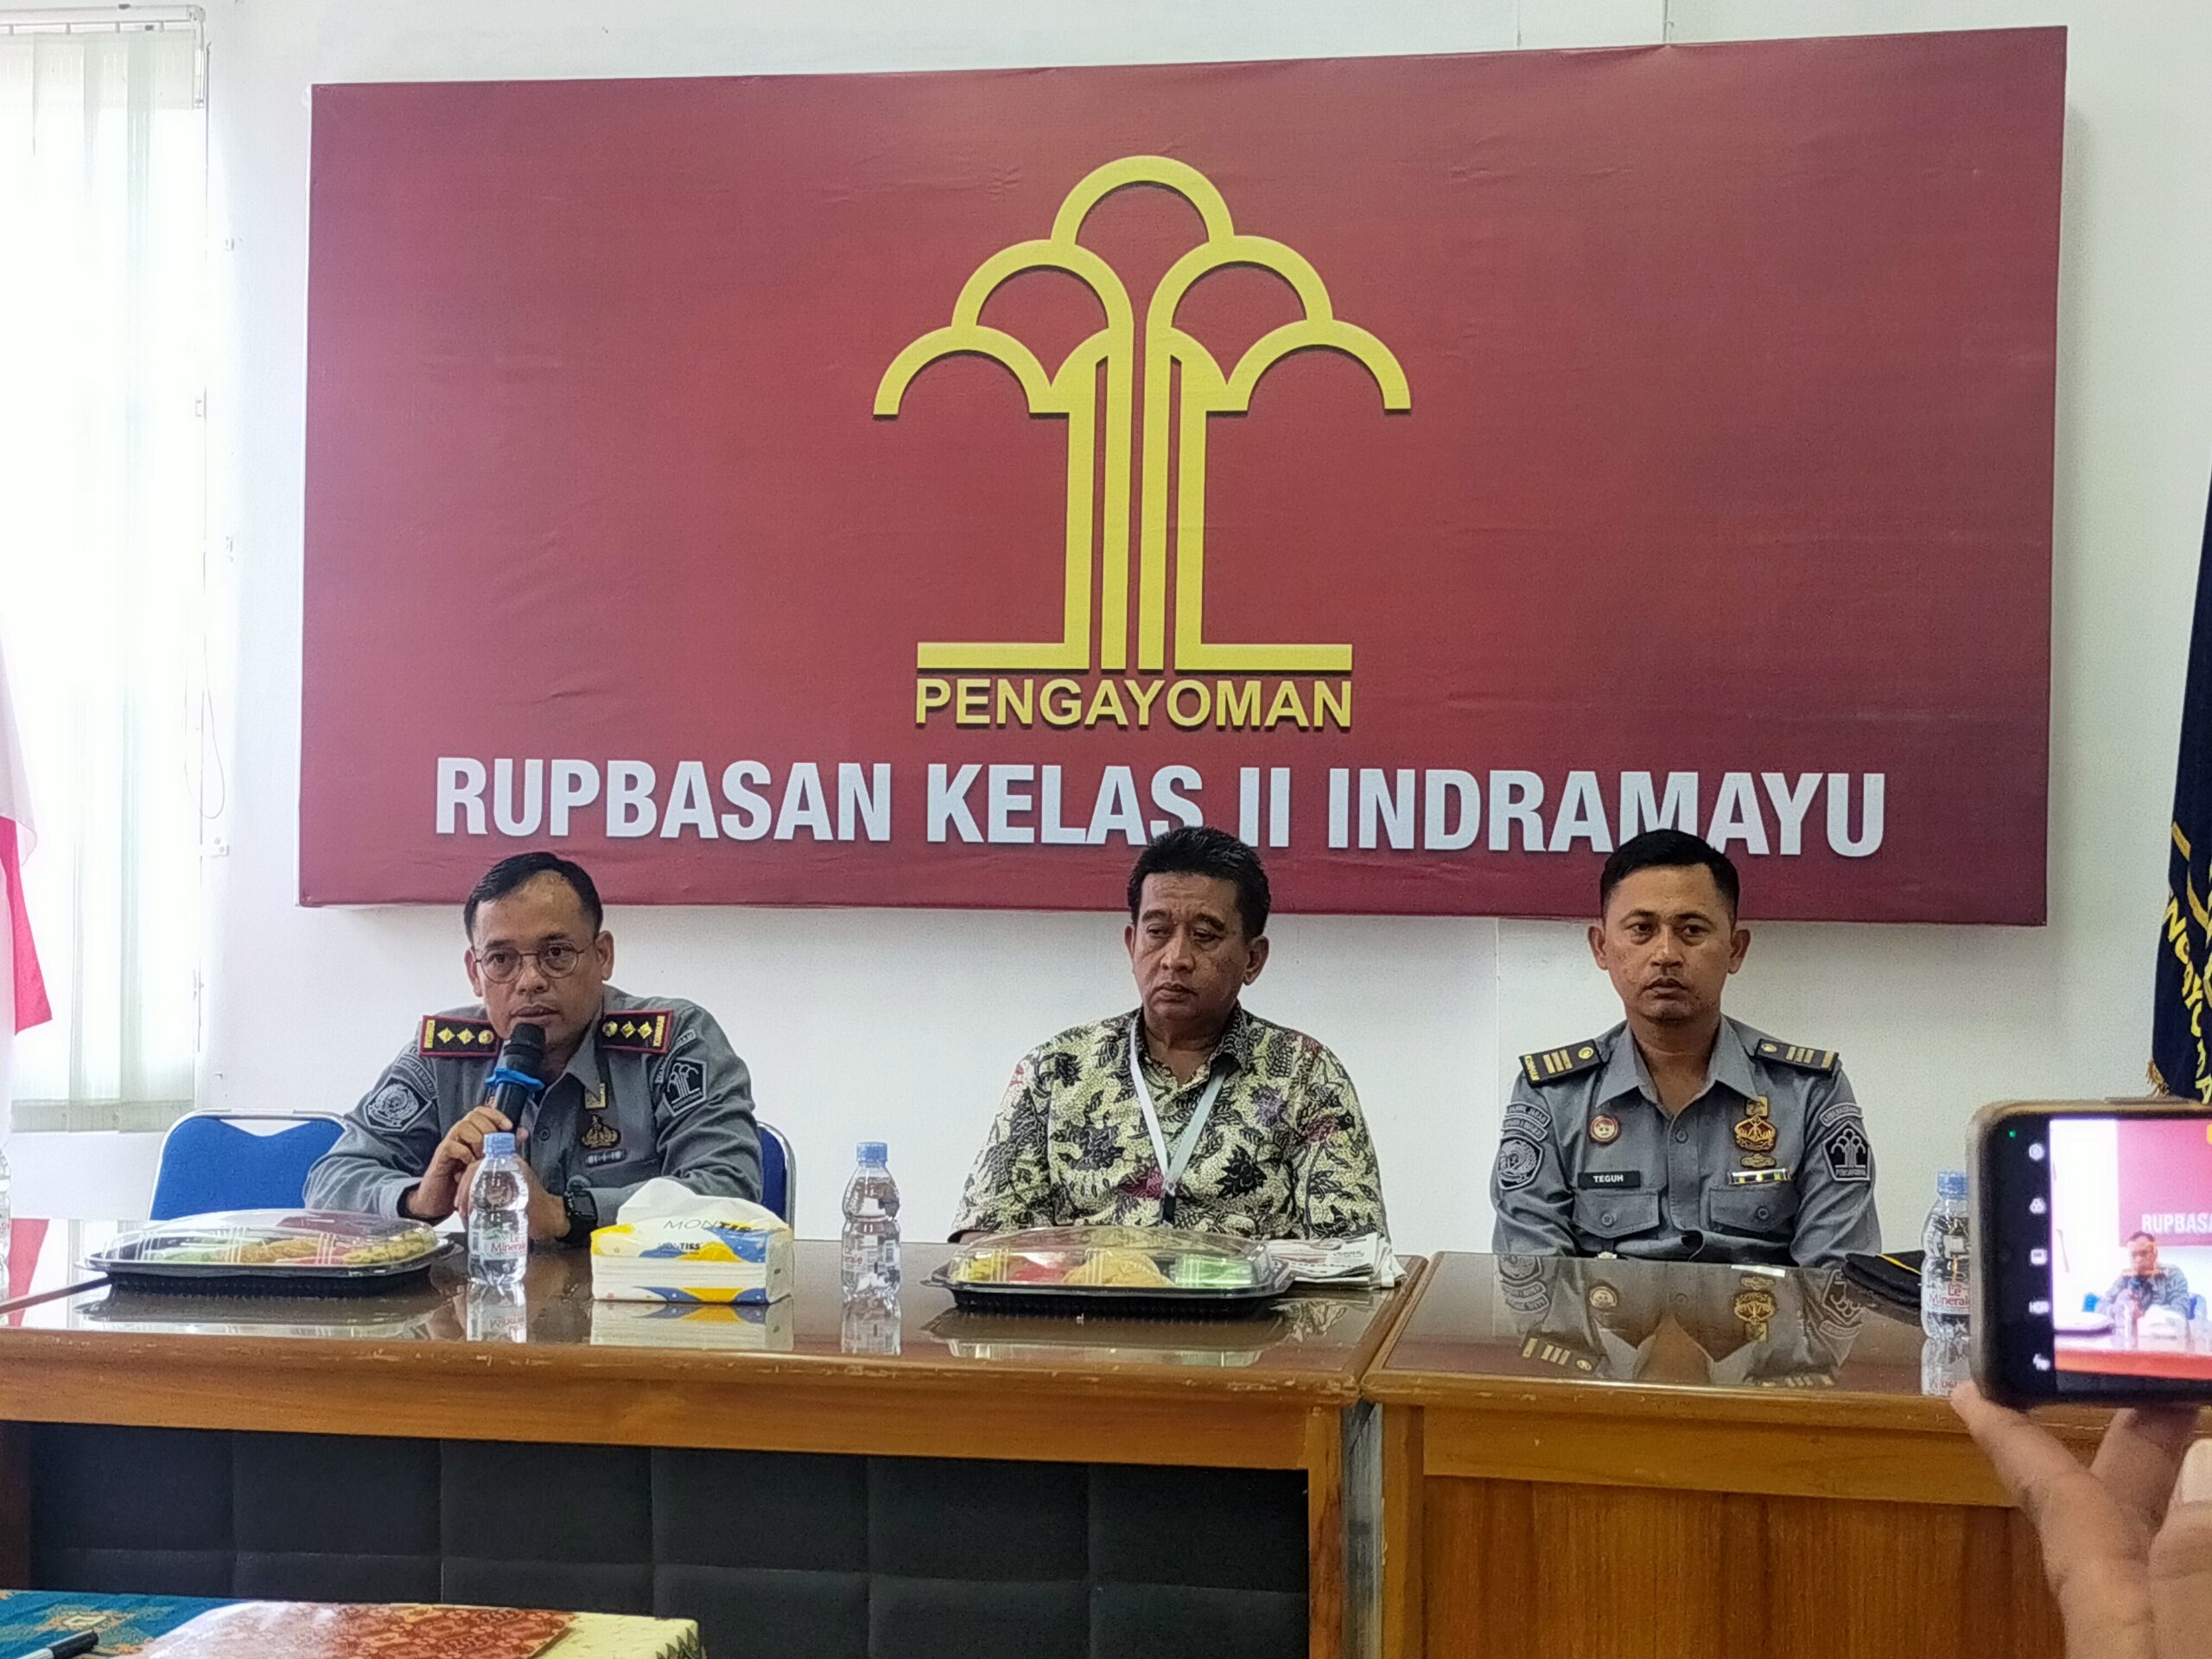 Kepala Rupbasan Indramayu Nanang Badruzzaman, Kasubsi Administrasi dan Pengelolaan Teguh, GM Radar Indramayu Adun Sastra